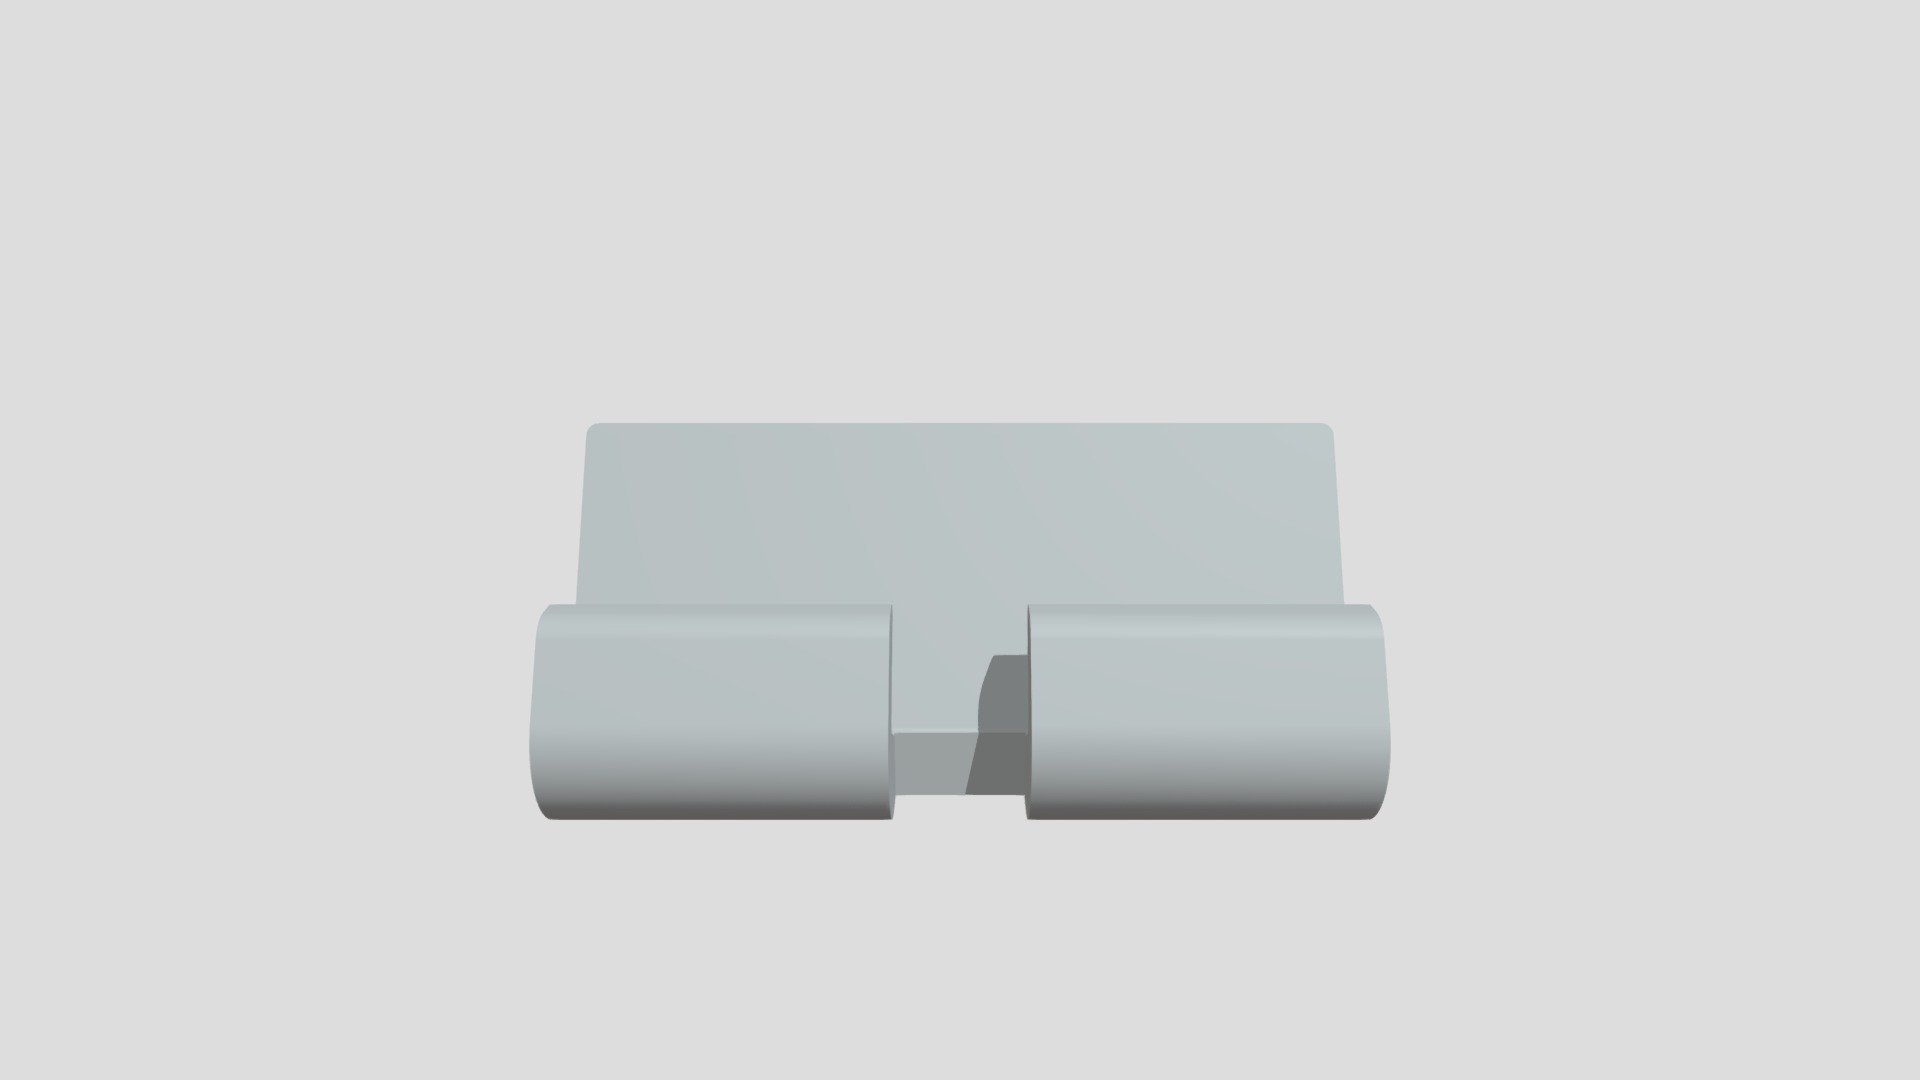 iPad Stand w/ Screw hole for tripod -main part